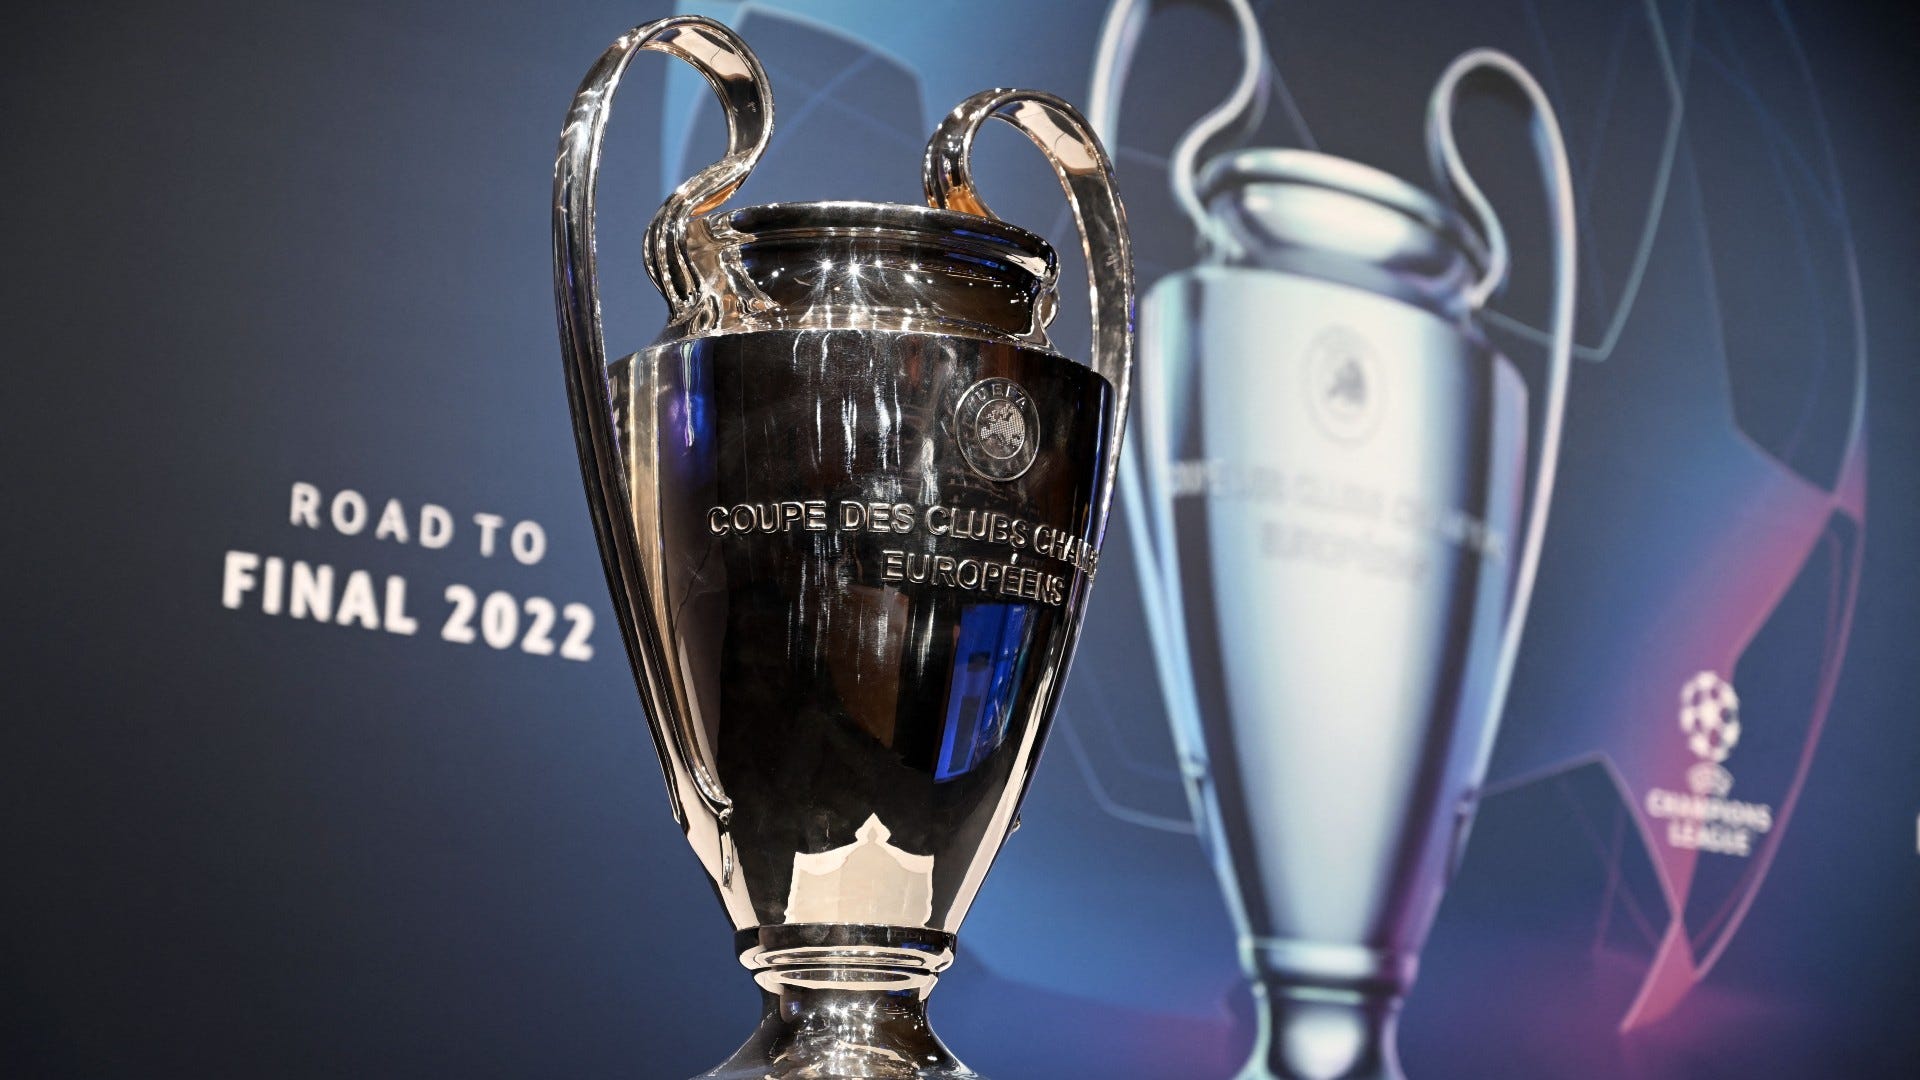 Champions League final 2022 Date, TV channel, live stream, tickets and venue Goal English Saudi Arabia